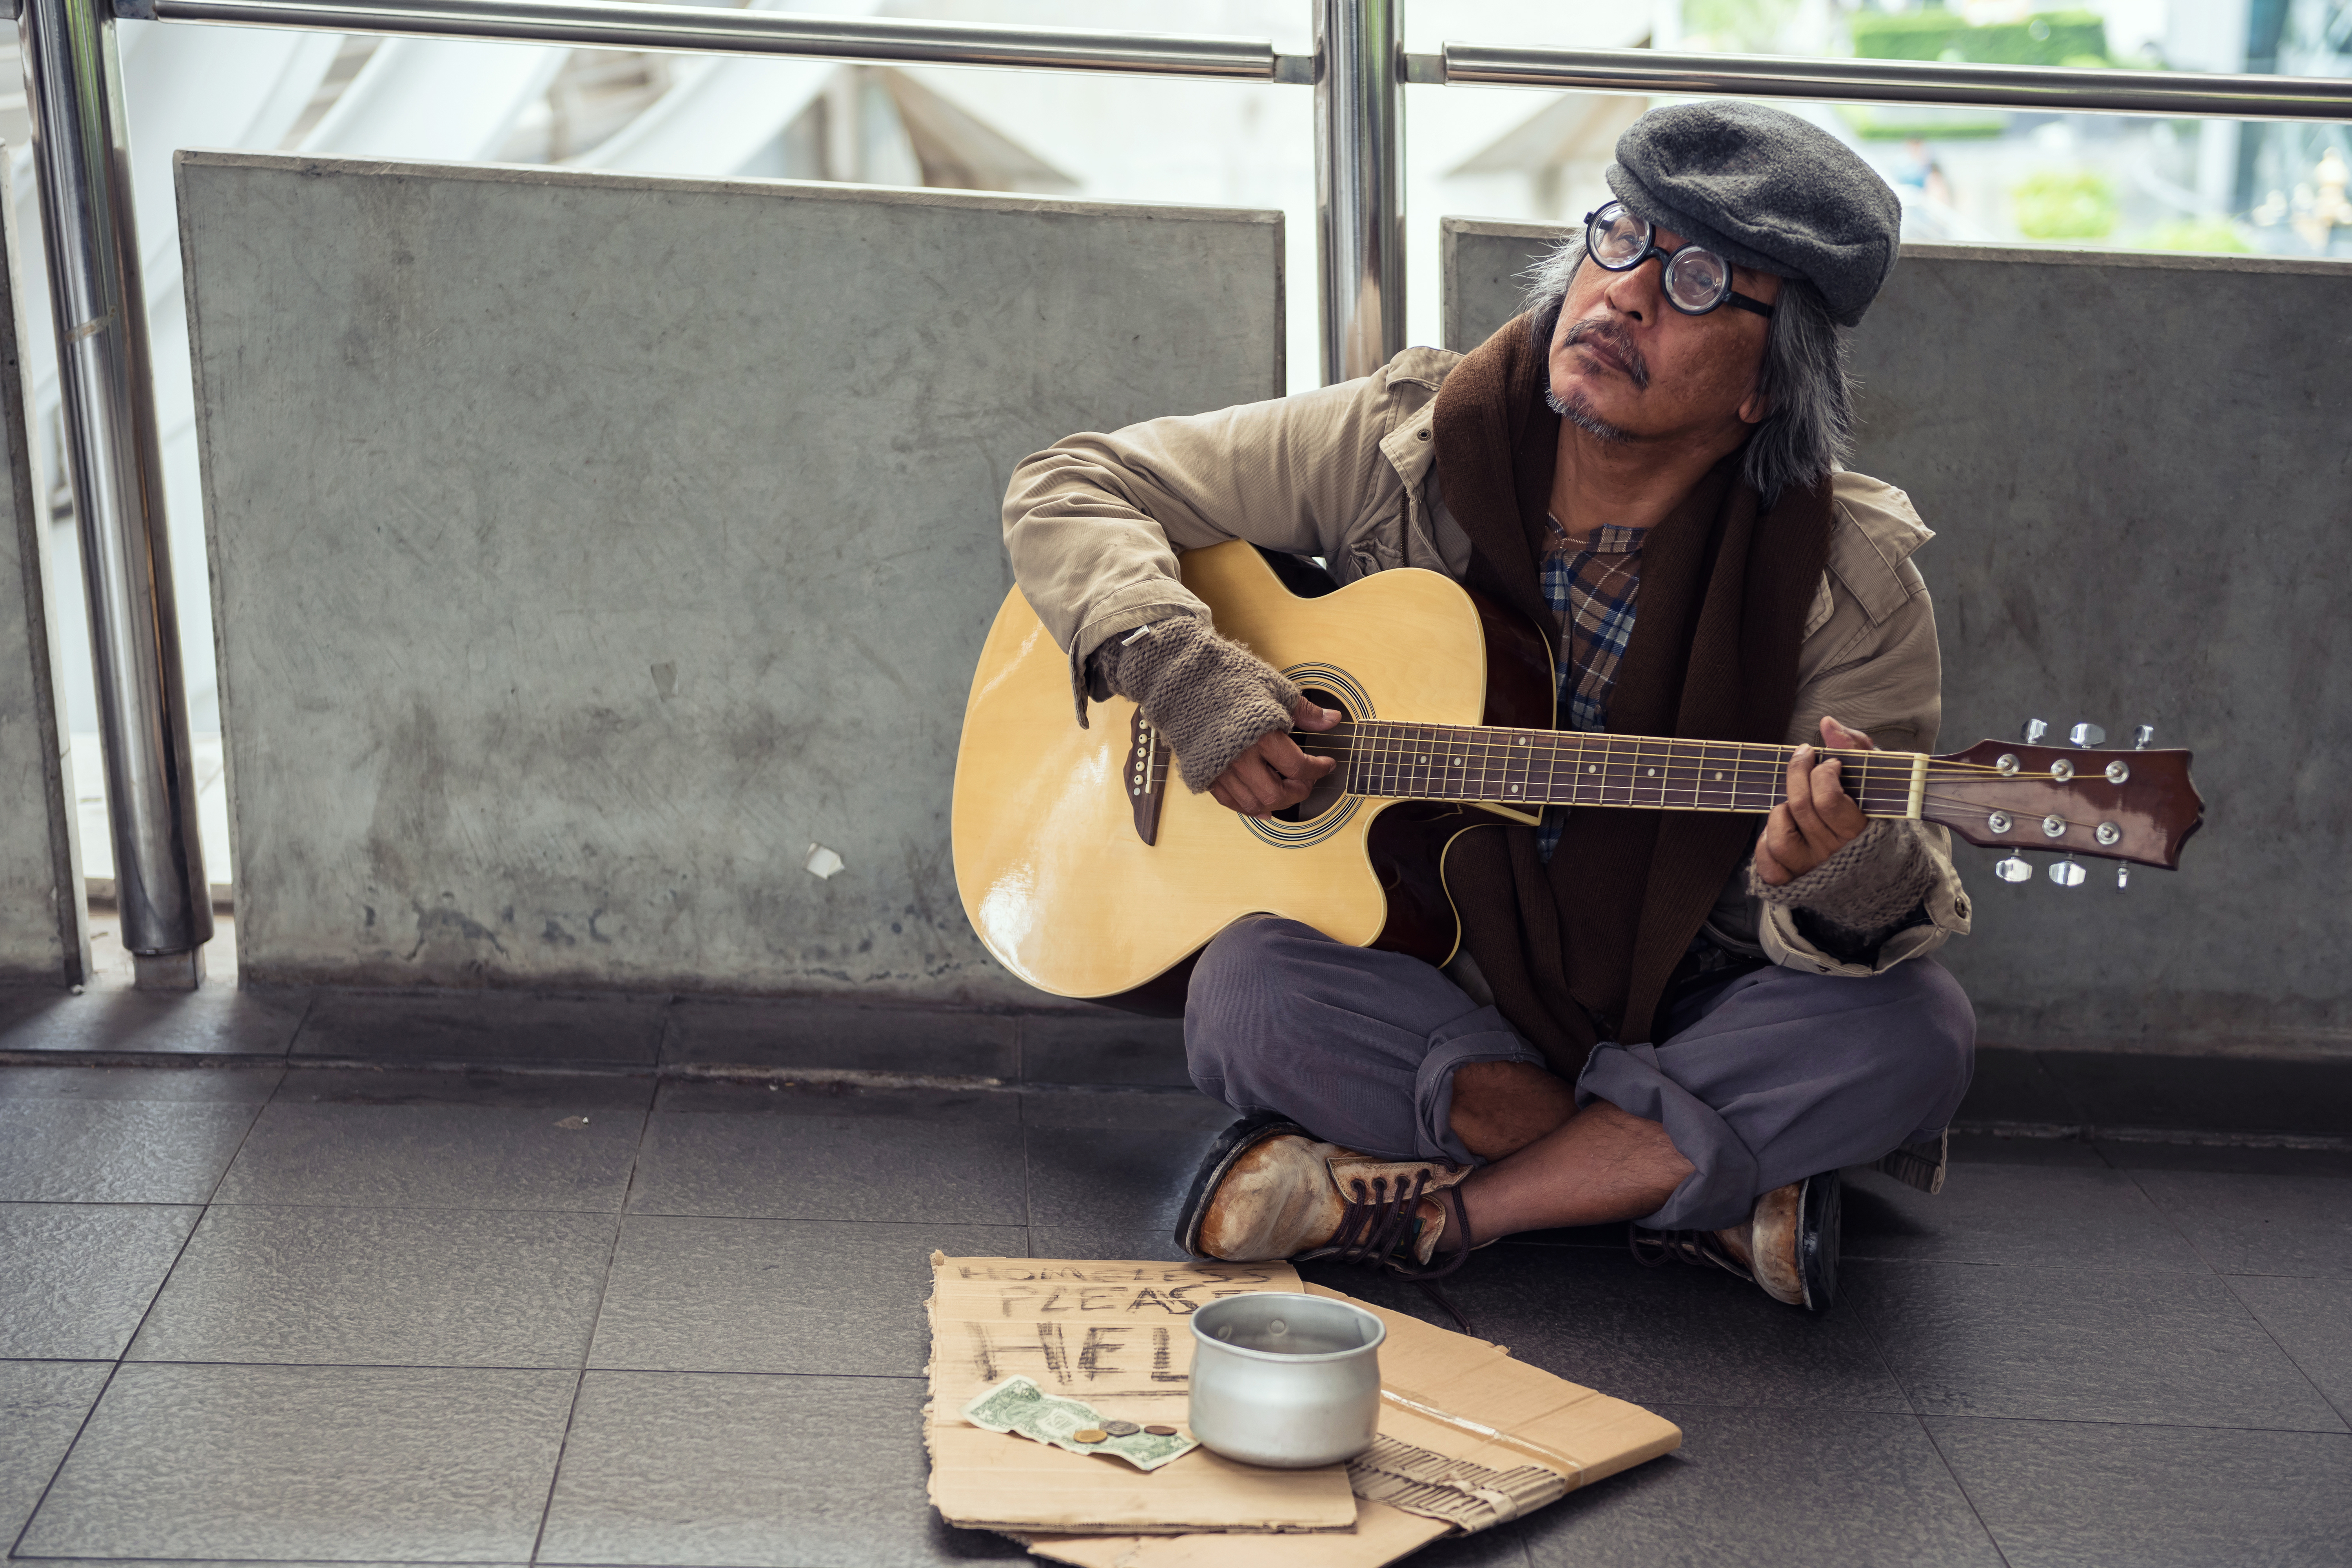 Viejo mendigo o anciano sin techo tocando la guitarra. | Fuente: Shutterstock